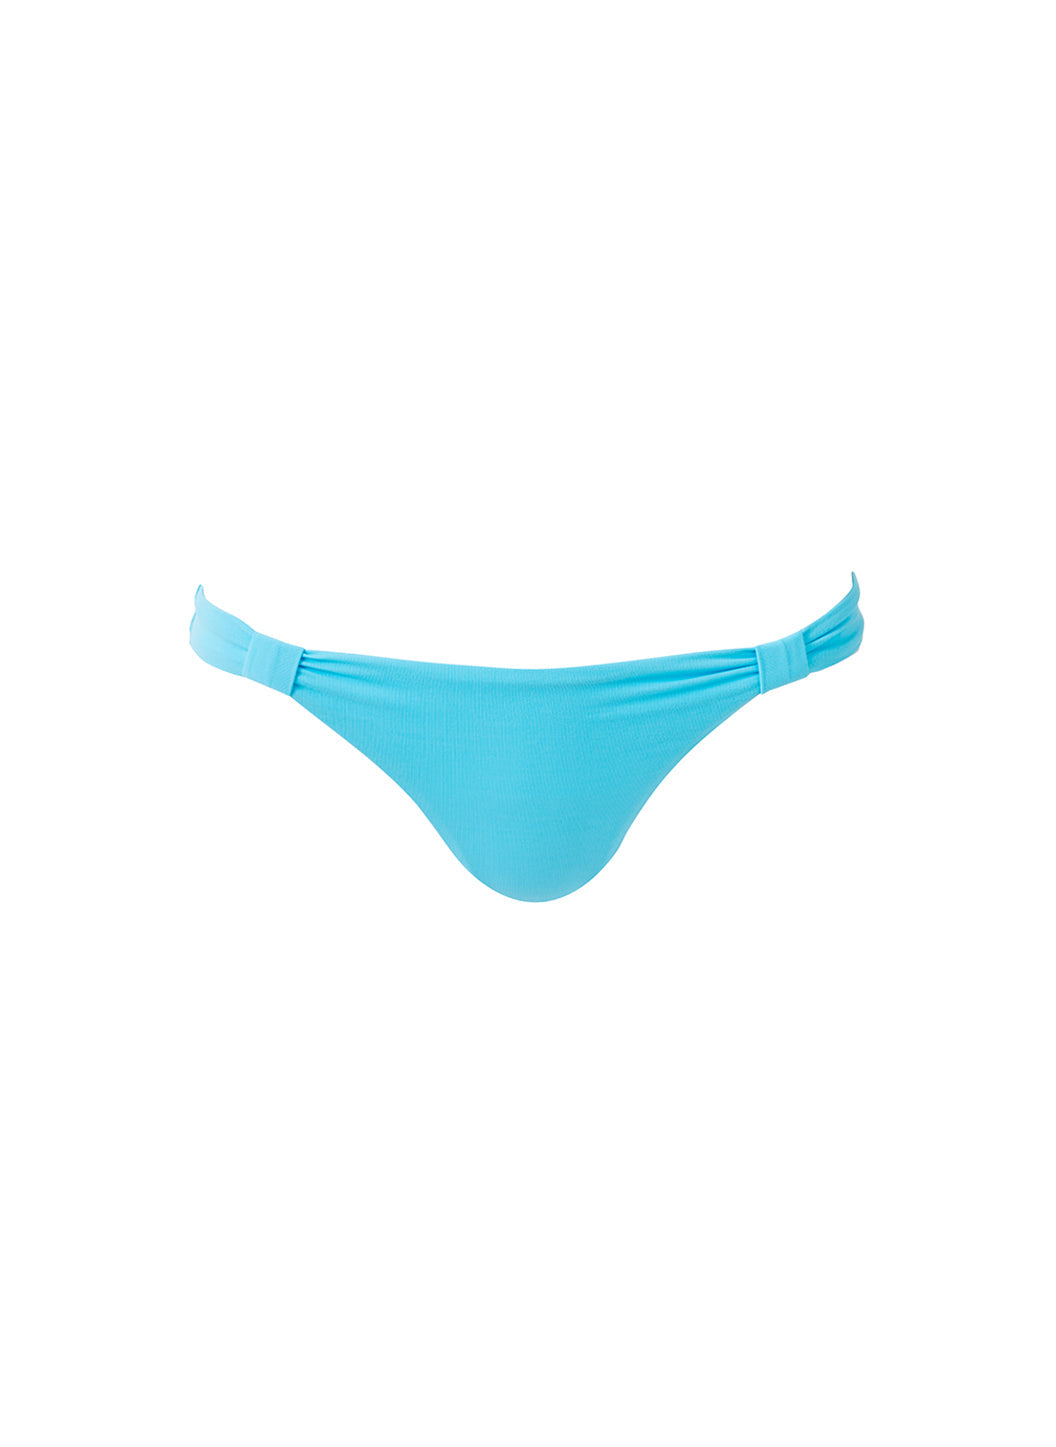 stockholm-turquoise-bikini-bottom_cutout